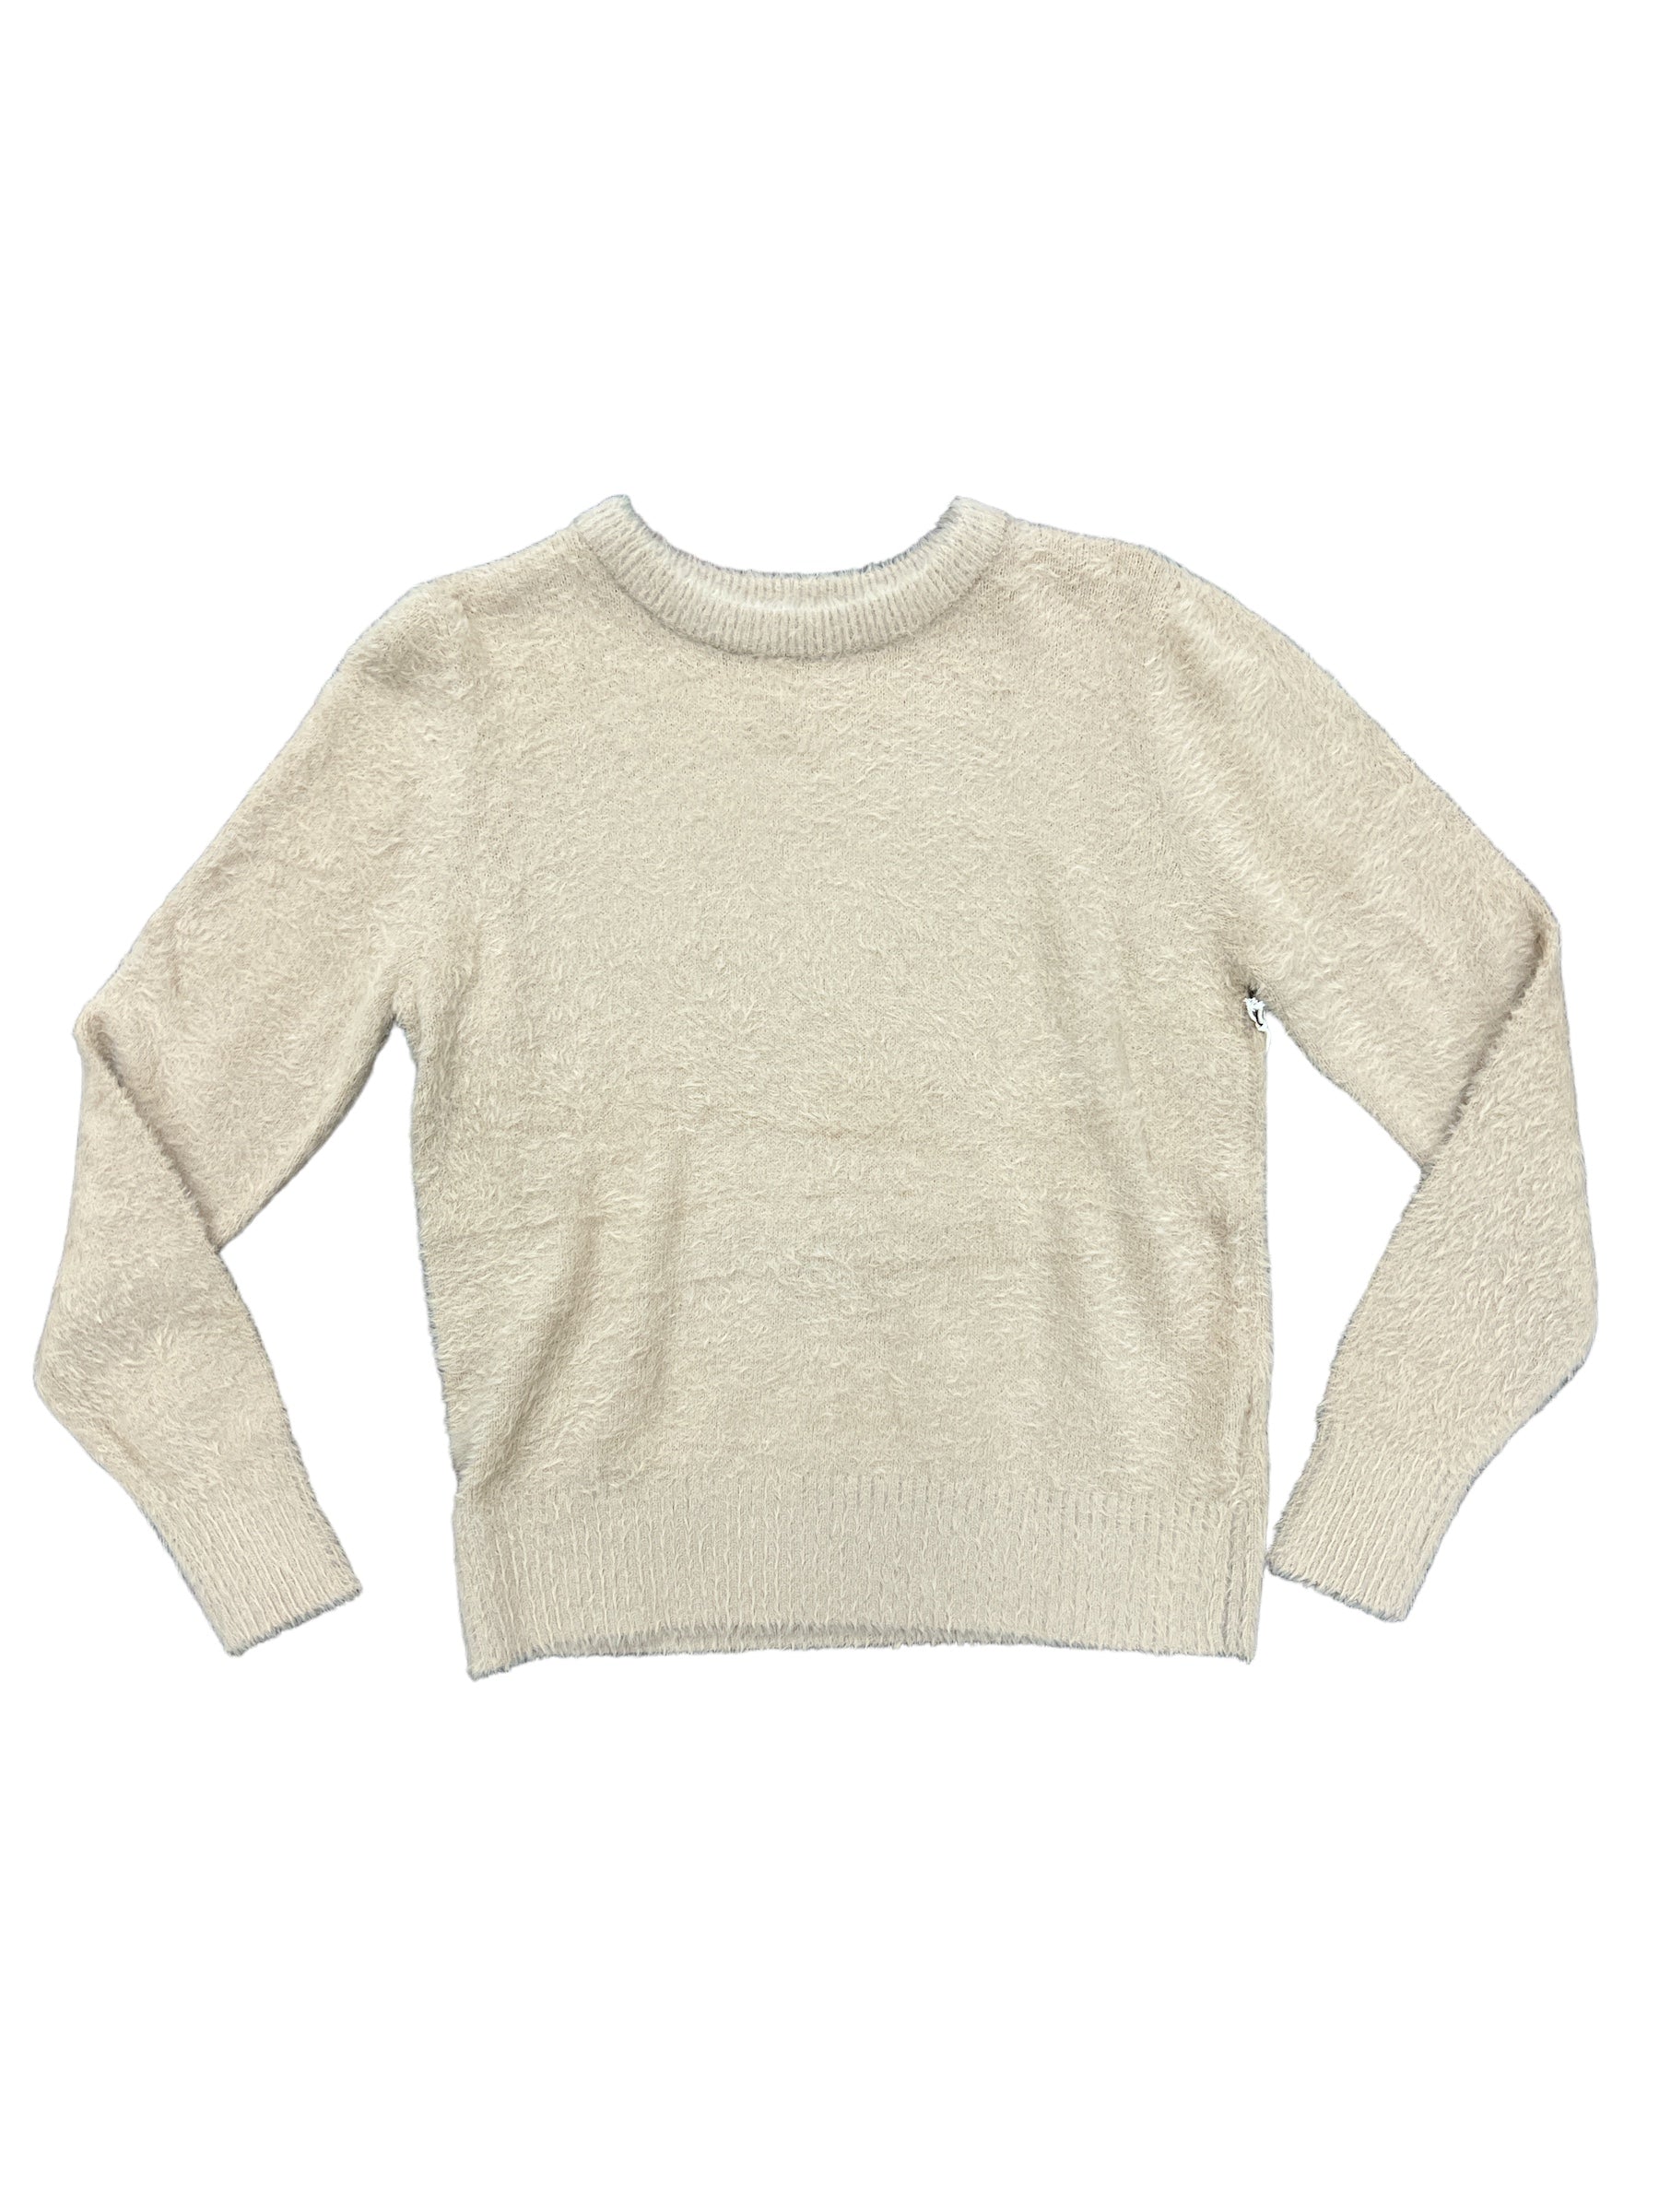 Finley Sweater-140 Sweaters, Cardigans & Sweatshirts-Simply Stylish Boutique-Simply Stylish Boutique | Women’s & Kid’s Fashion | Paducah, KY